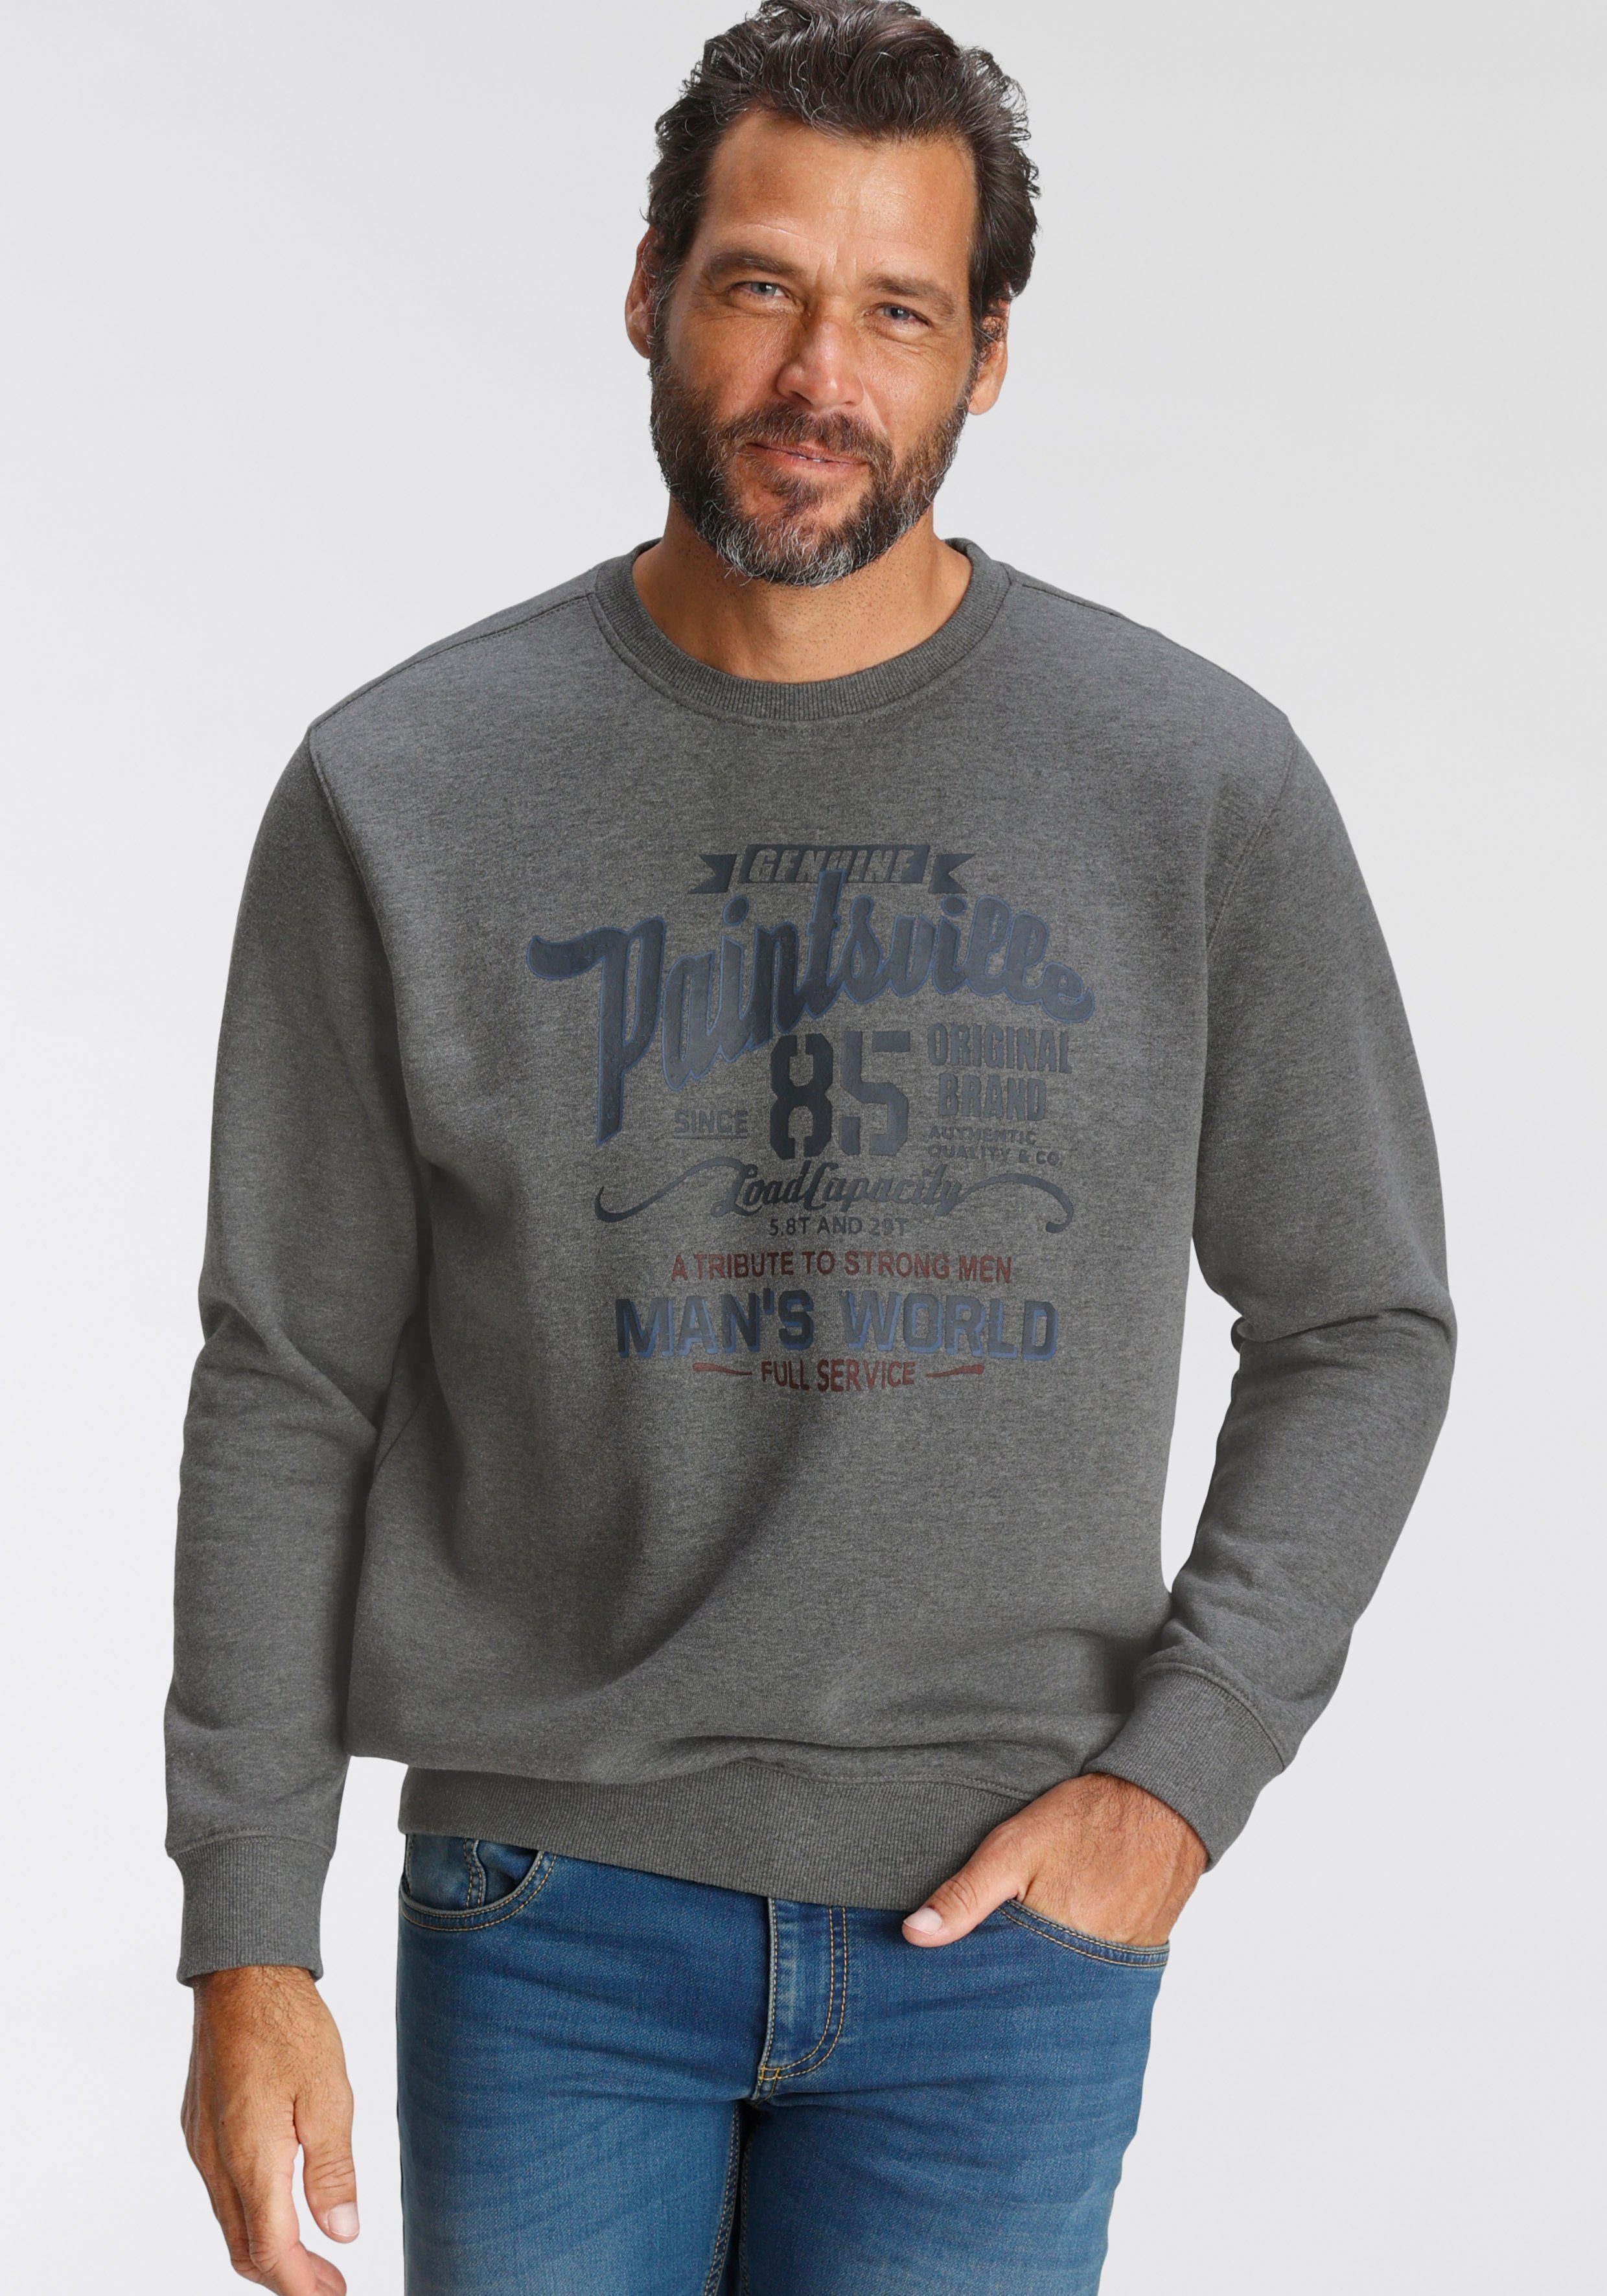 Herren Pullover Man's World Sweatshirt